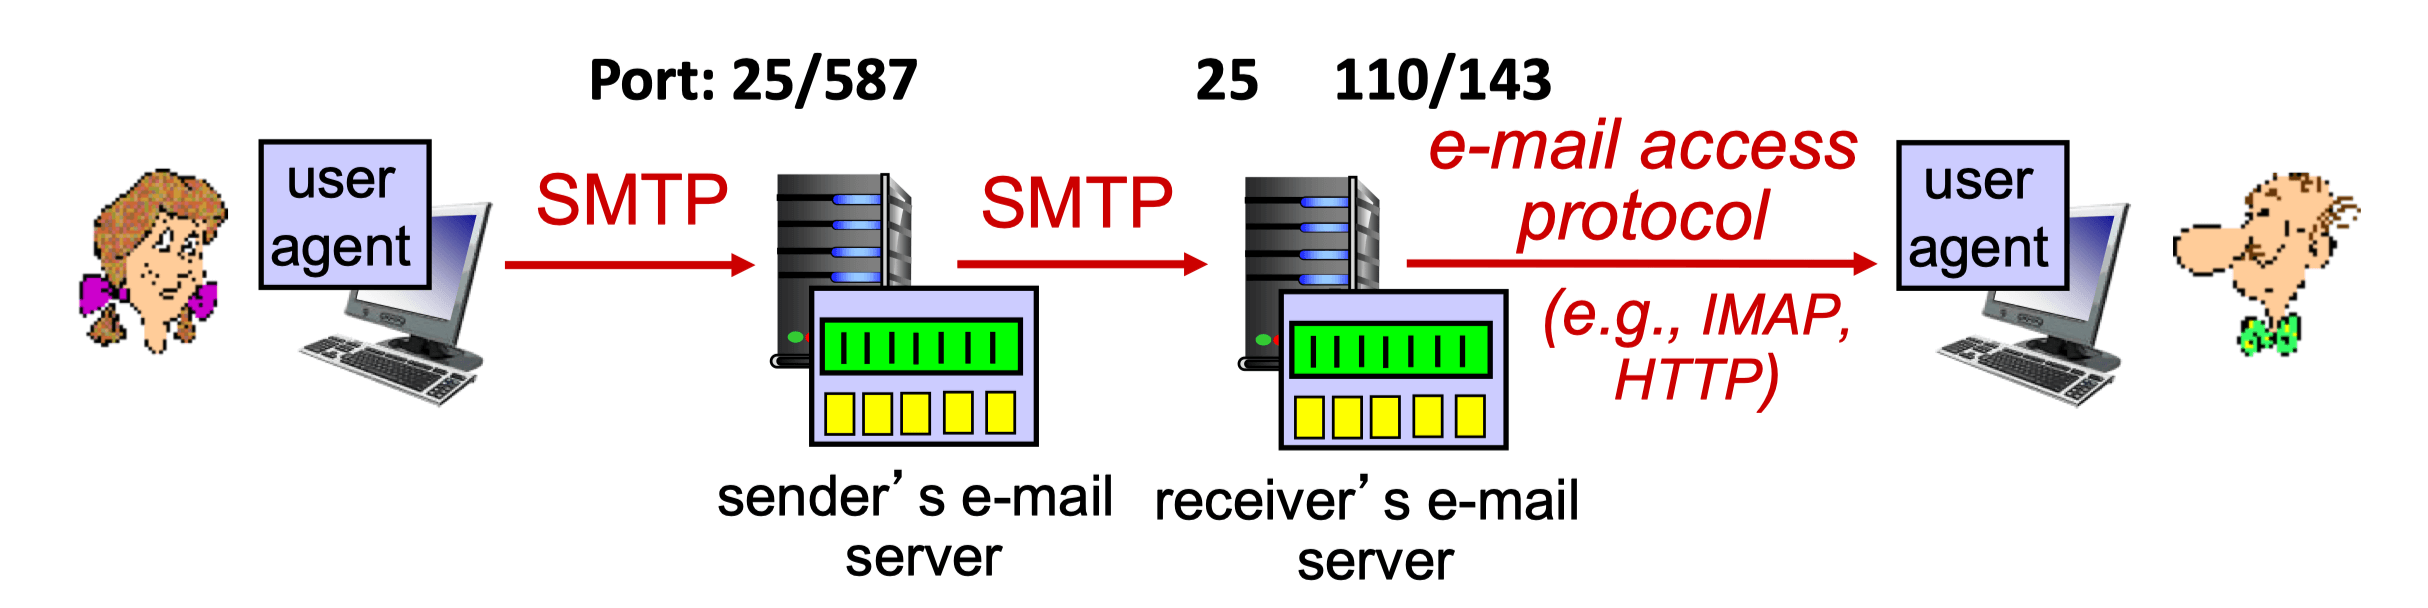 mail_access_protocols